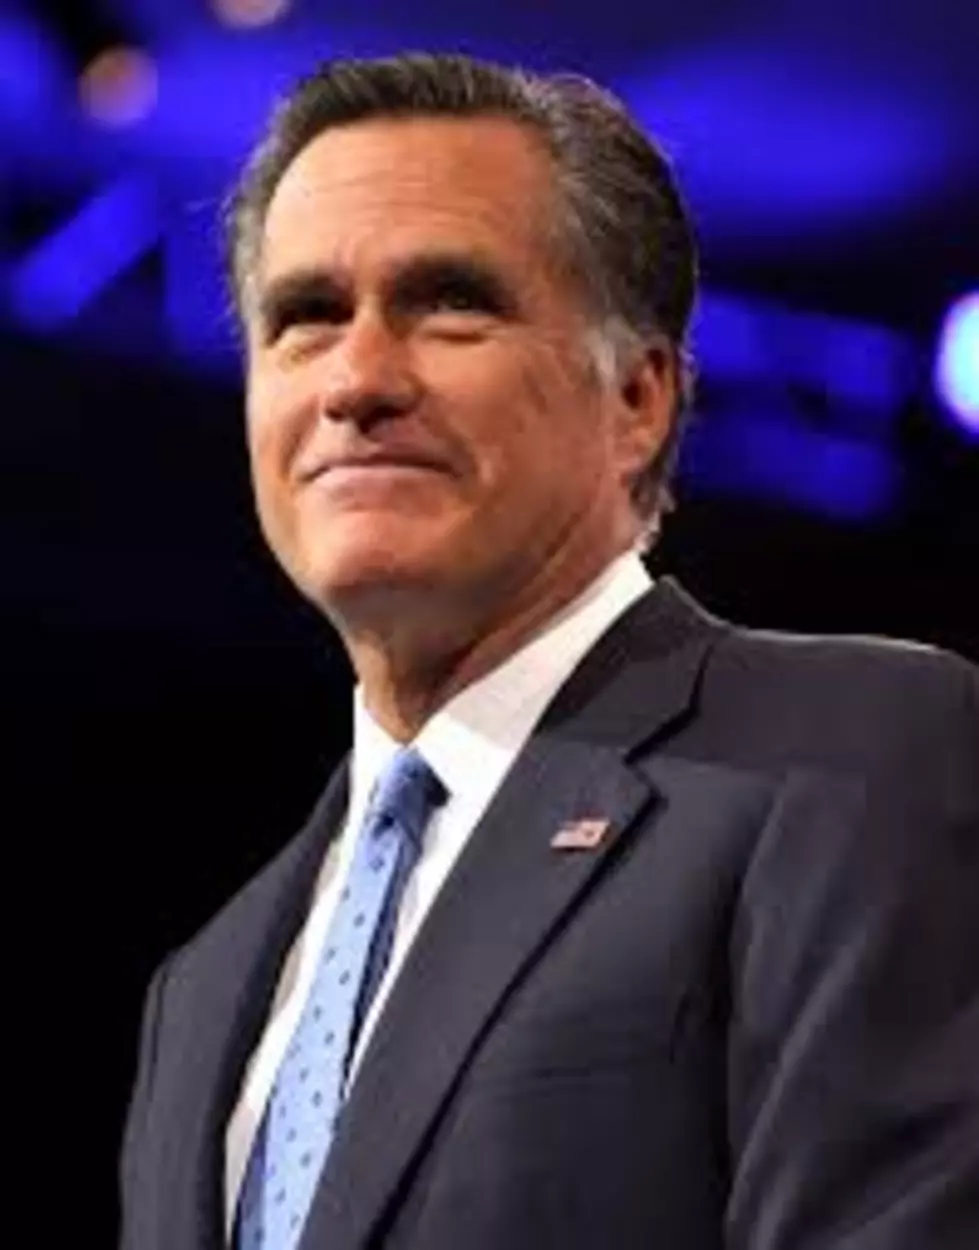 Romney Calls For Investigation Into U.S. Journalist Death